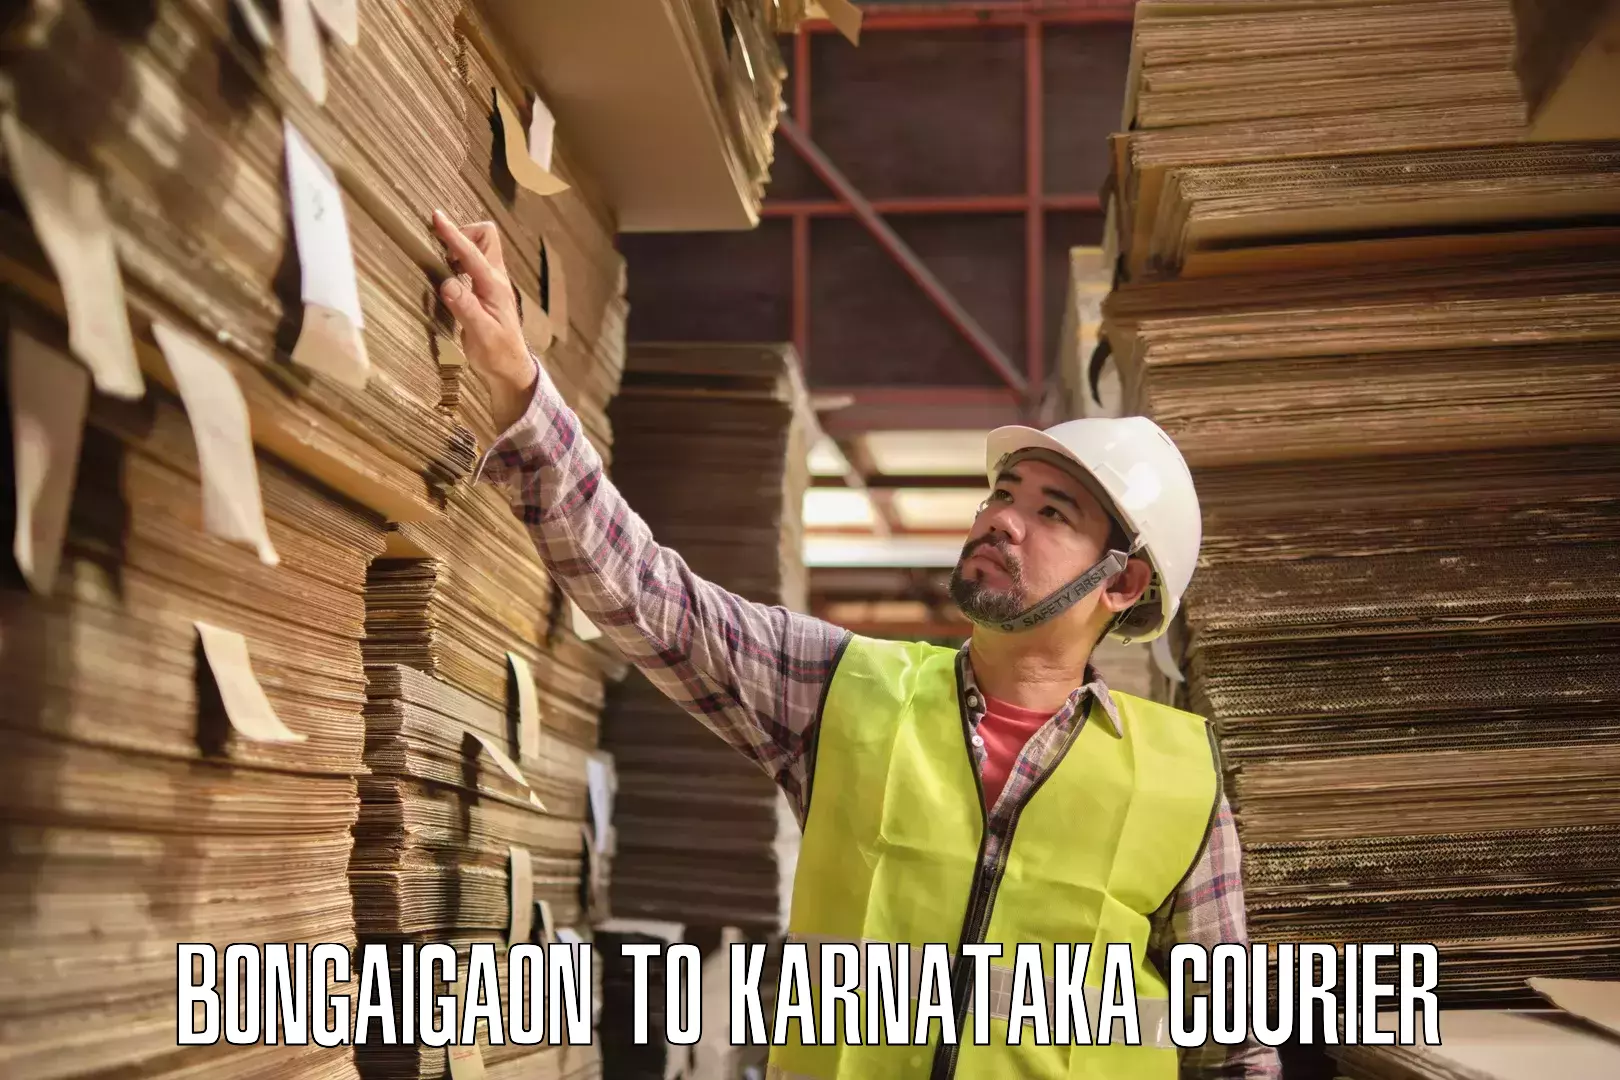 Courier service partnerships Bongaigaon to Karnataka